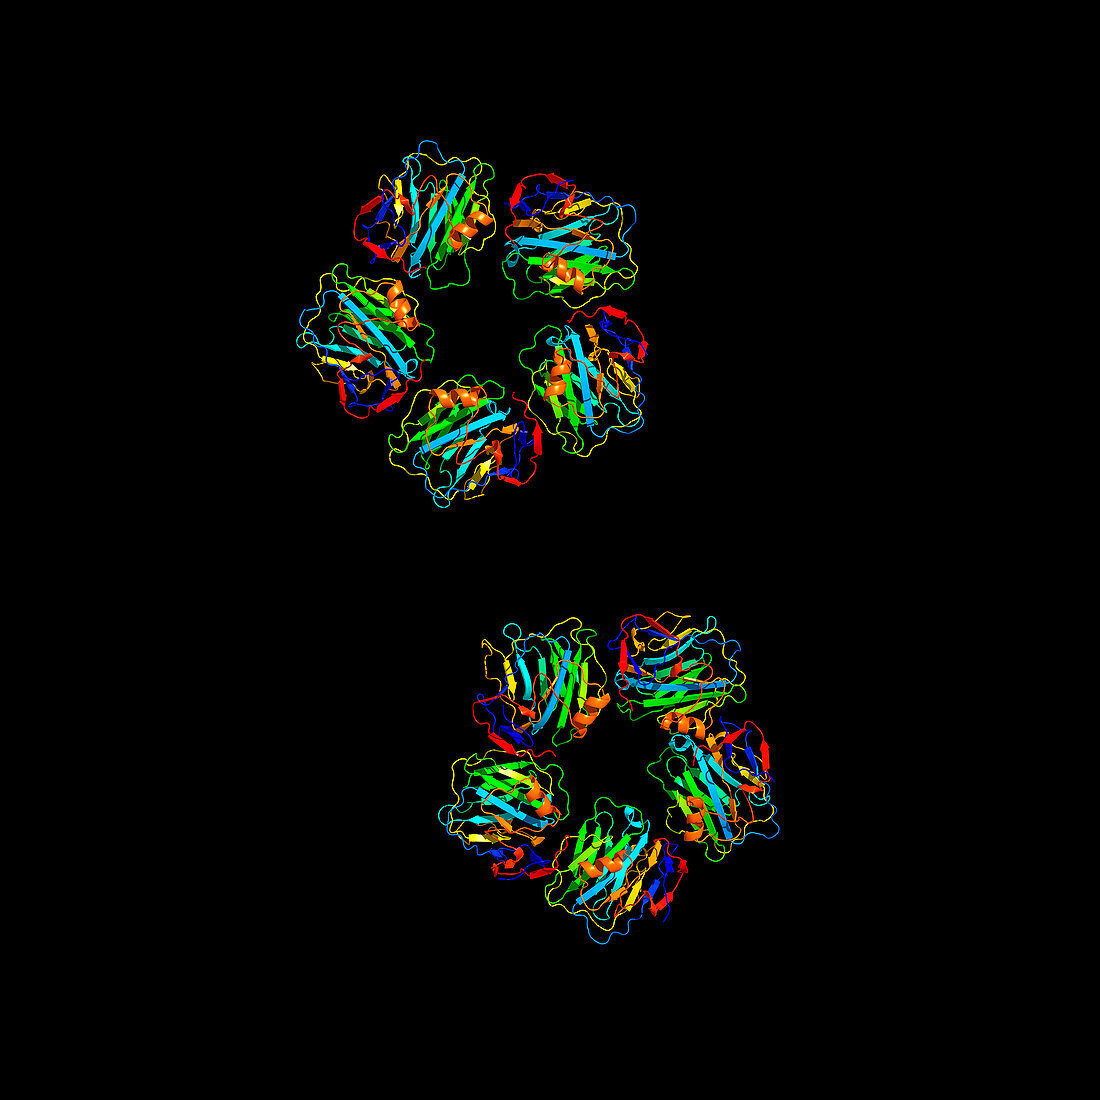 C-reactive protein,molecular models